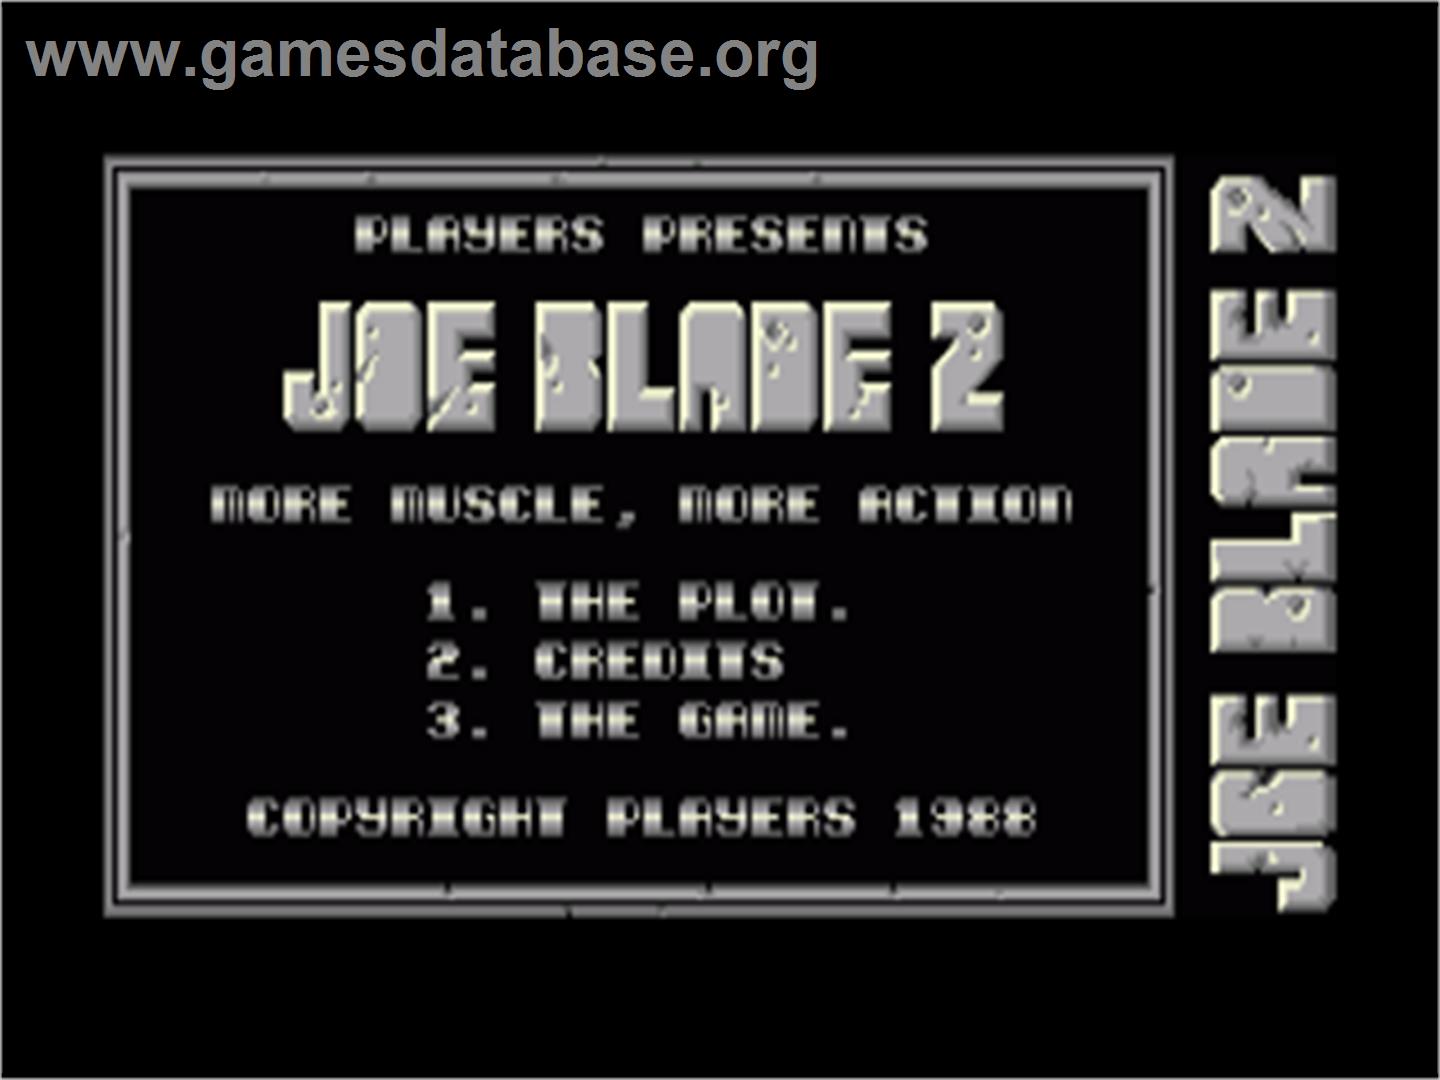 Joe Blade 2 - Commodore Amiga - Artwork - Title Screen